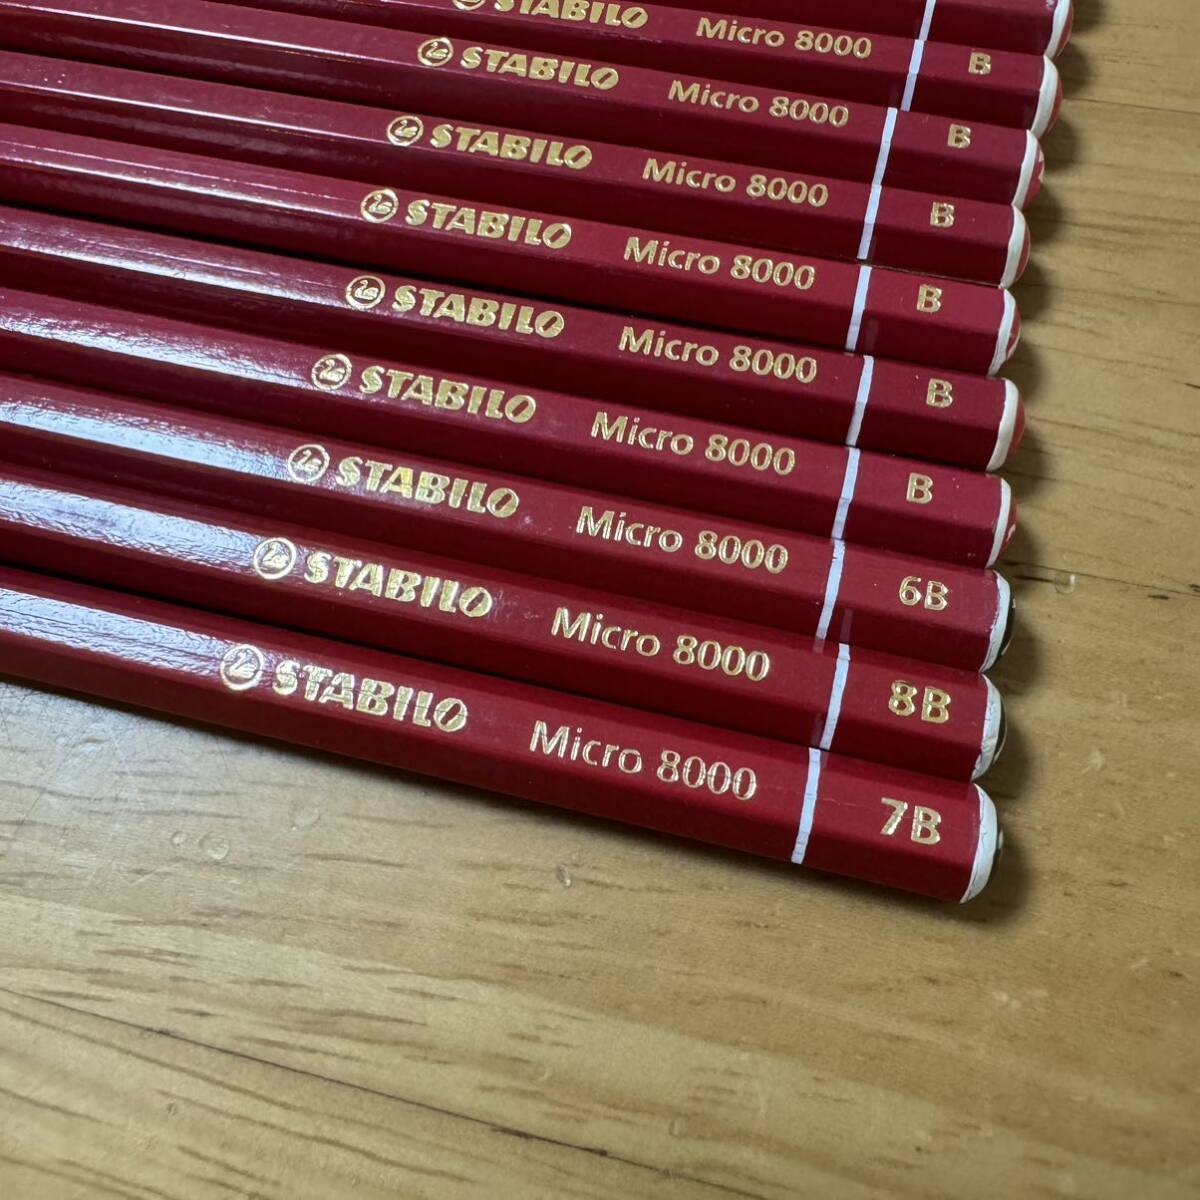  новый товар снят с производства STABILO stabi roMicro 8000 карандаш ....B 6B 7B 8B 15 шт. комплект te солнечный материалы для рисования Germany